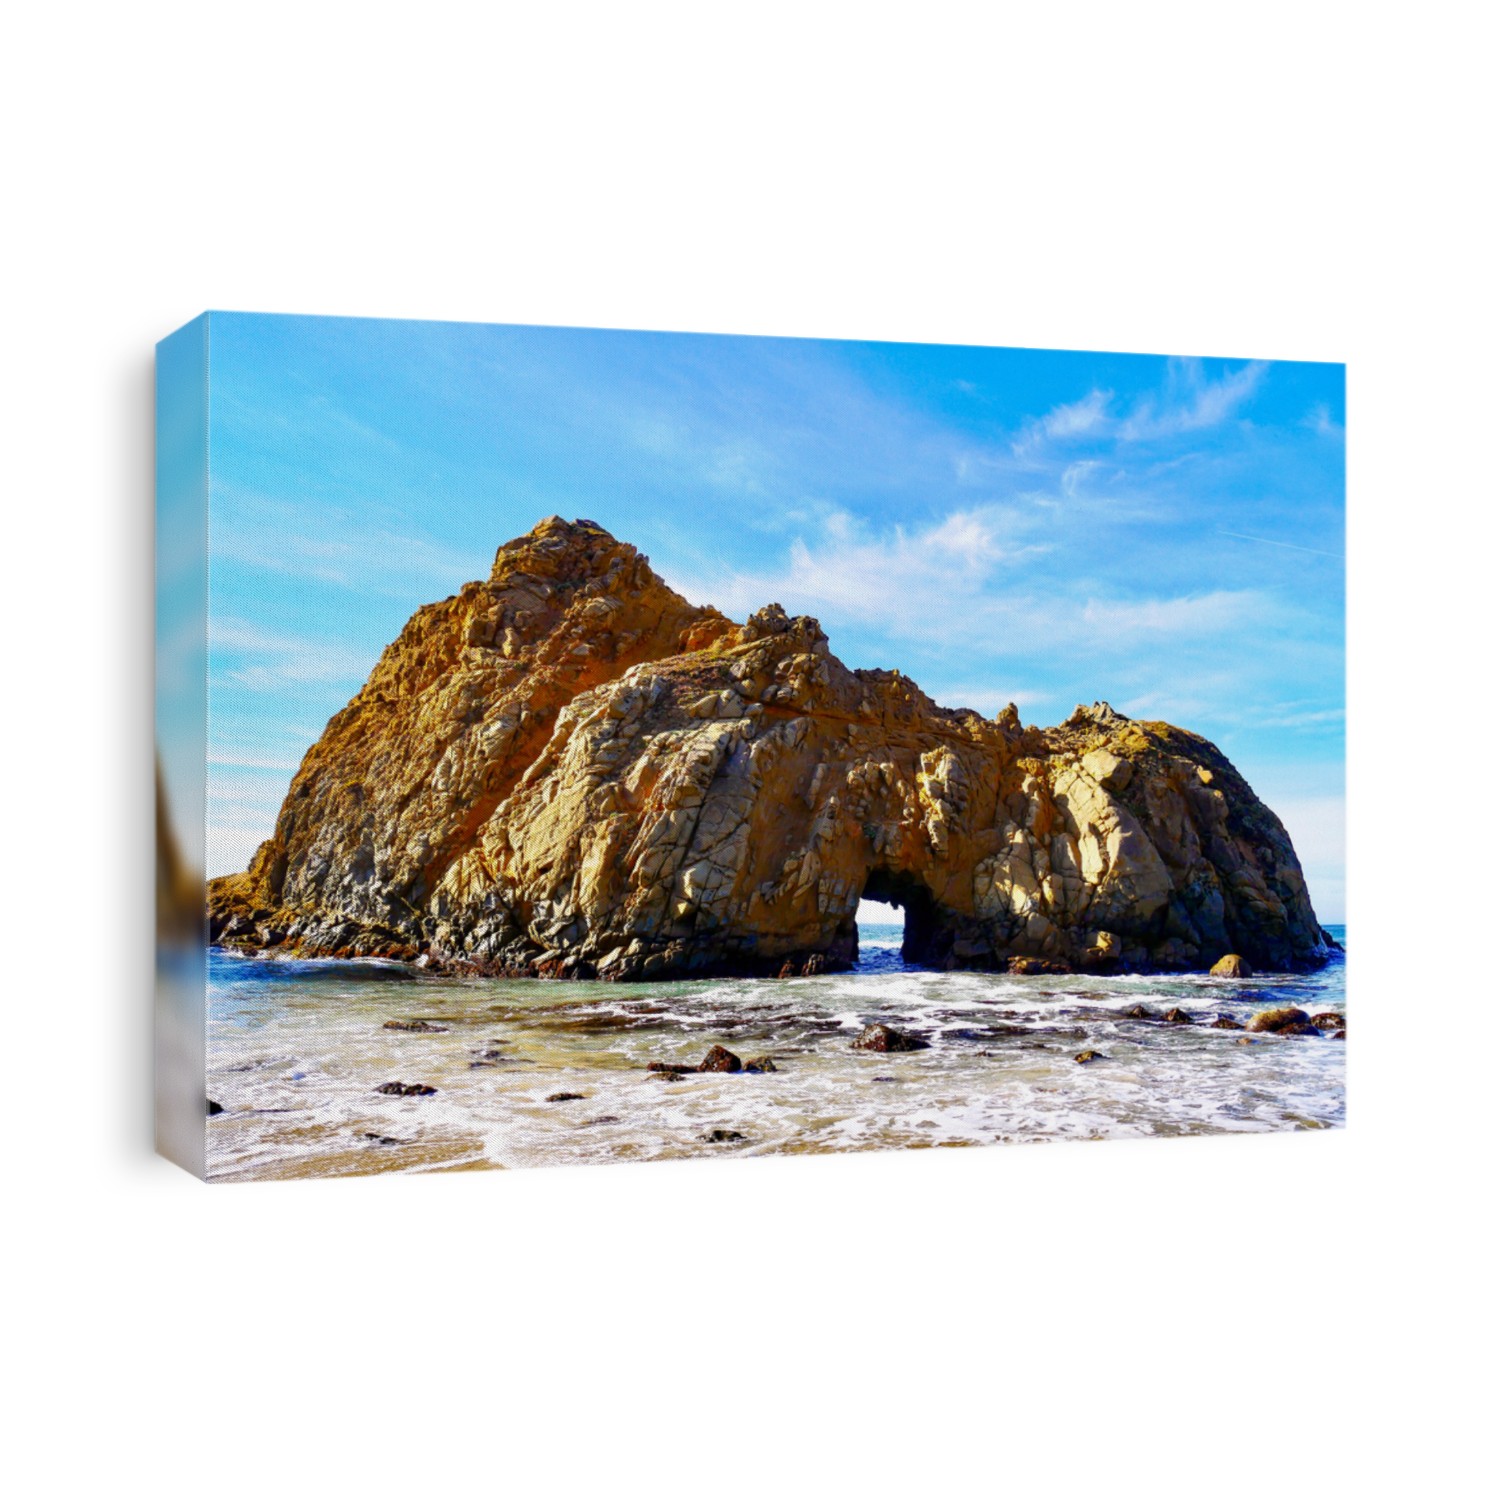 Pfeiffer Beach Keyhole Rock. Big Sur, Monterey County, California, USA.